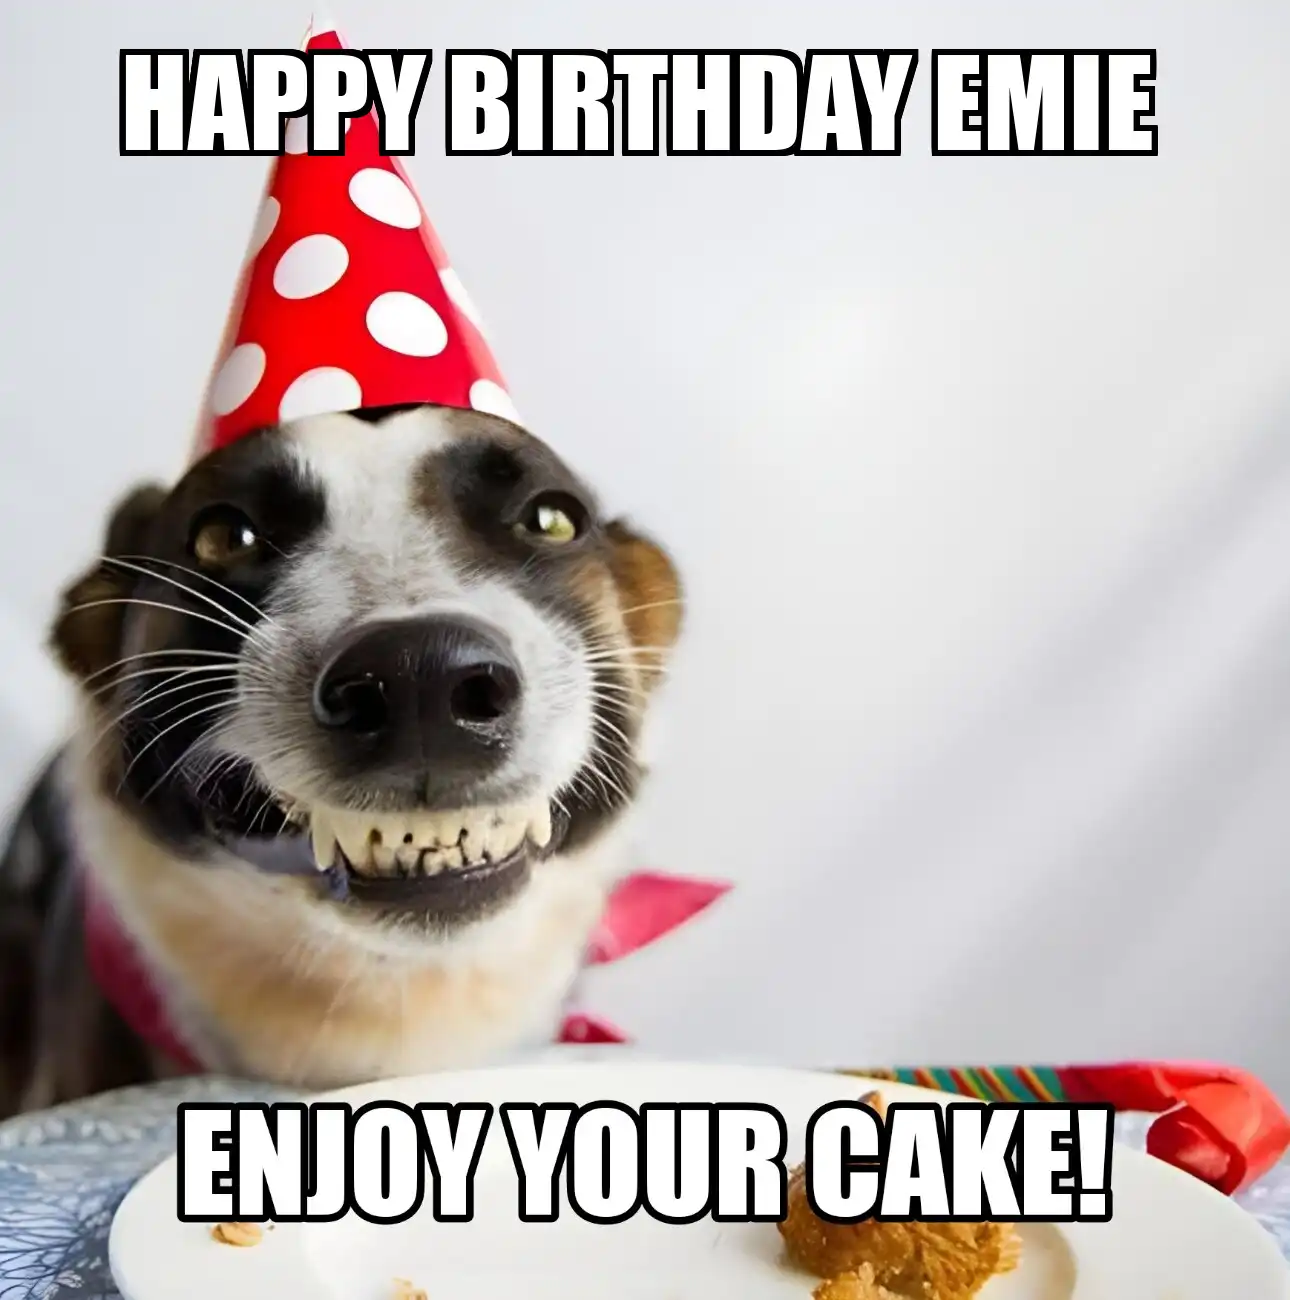 Happy Birthday Emie Enjoy Your Cake Dog Meme